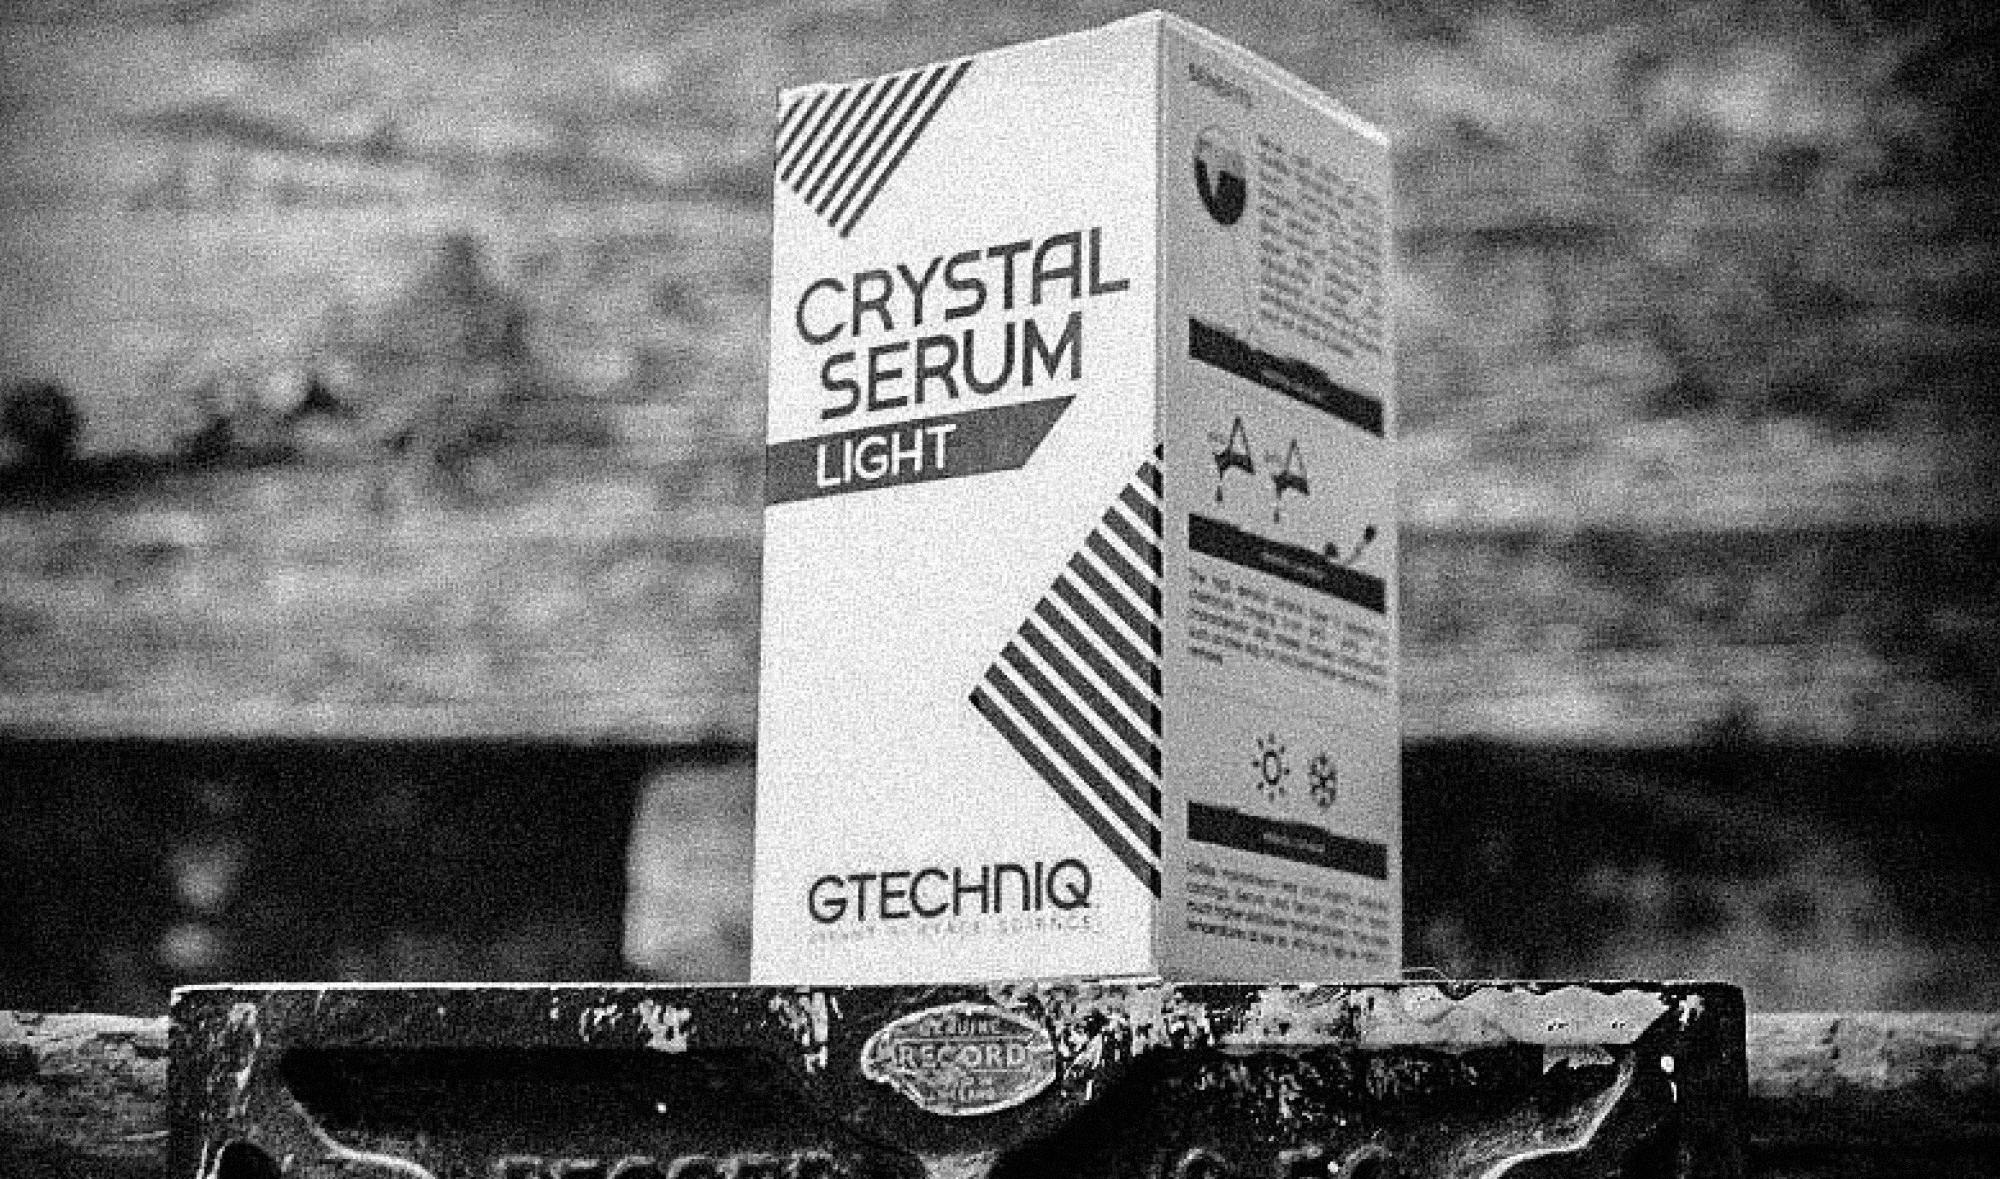 Gtechniq Crystal Serum Light - Bellissimoto Detailing London